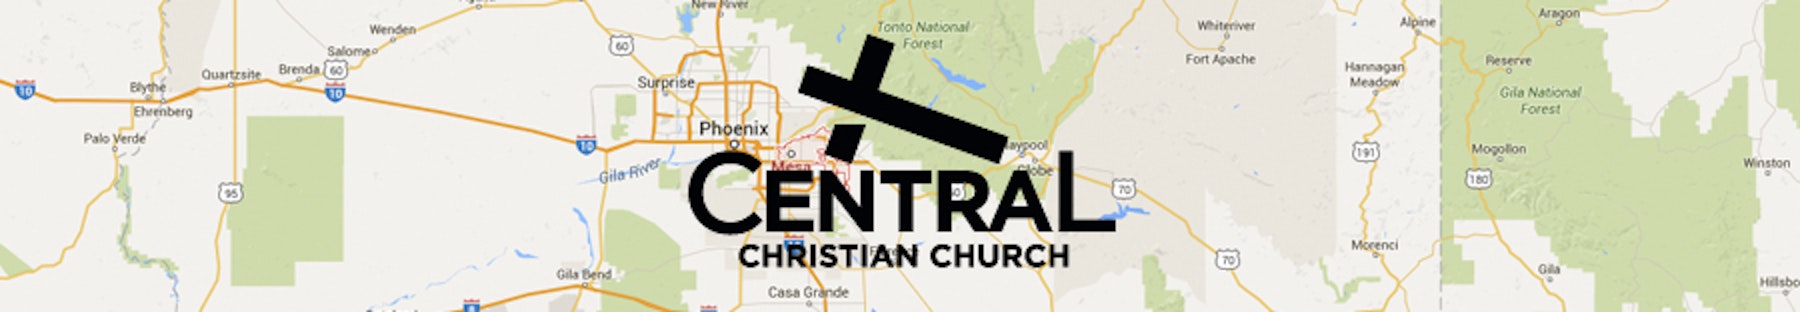 Central Christian Church: Contributing Toward Innovation